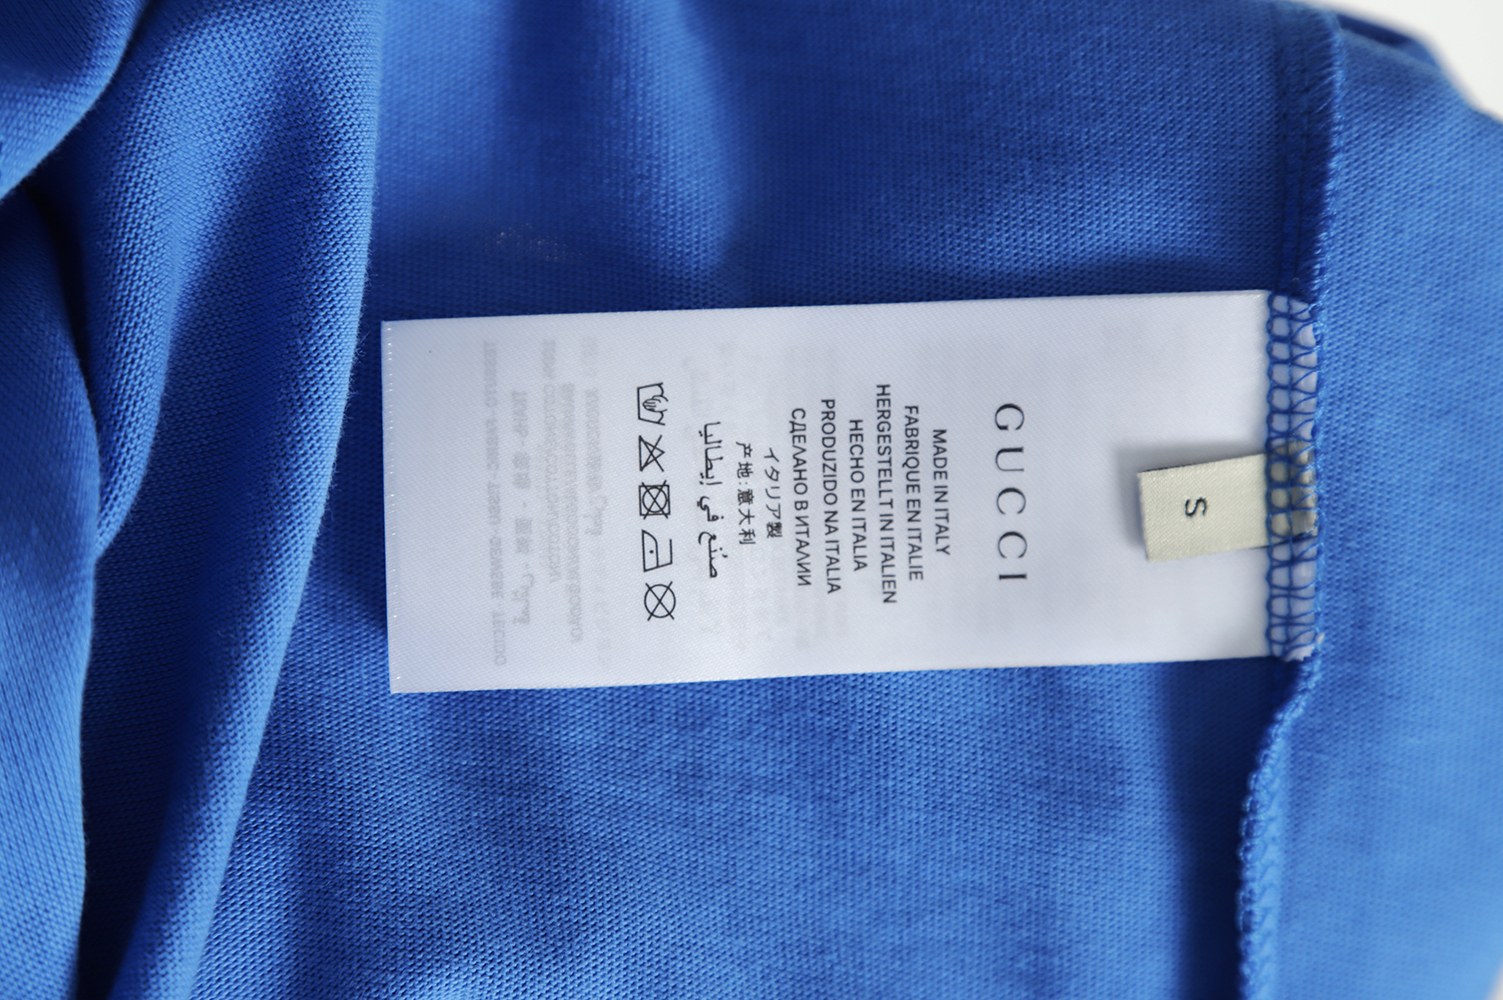 Gucci Chest Label Pocket Short Sleeve T-Shirt TSK1